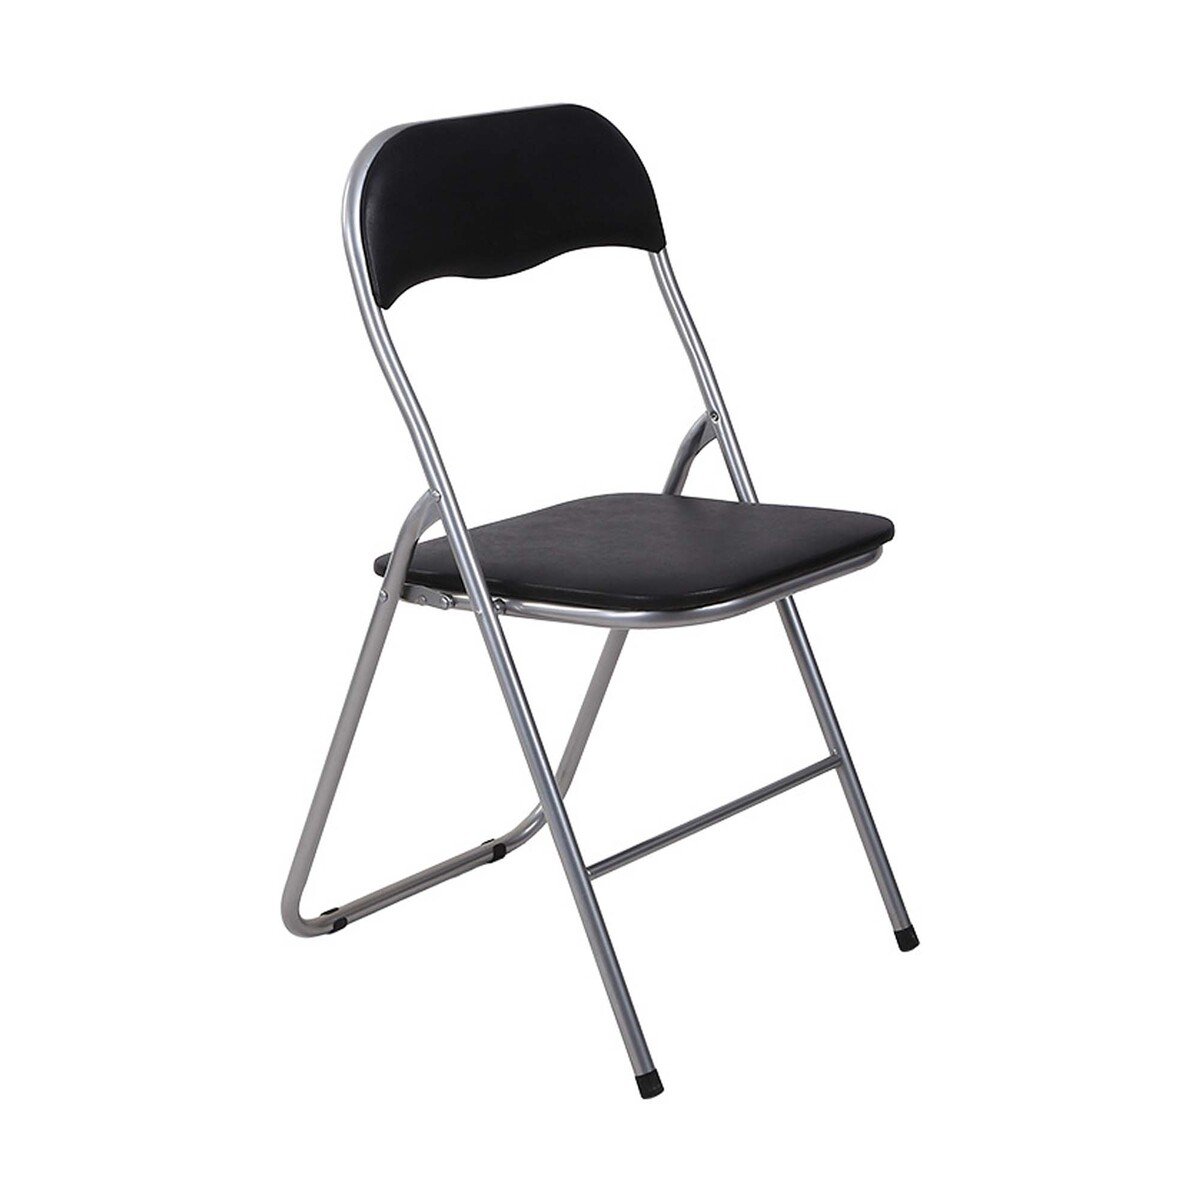 Maple Leaf Folding Chair HPZ-39 Black